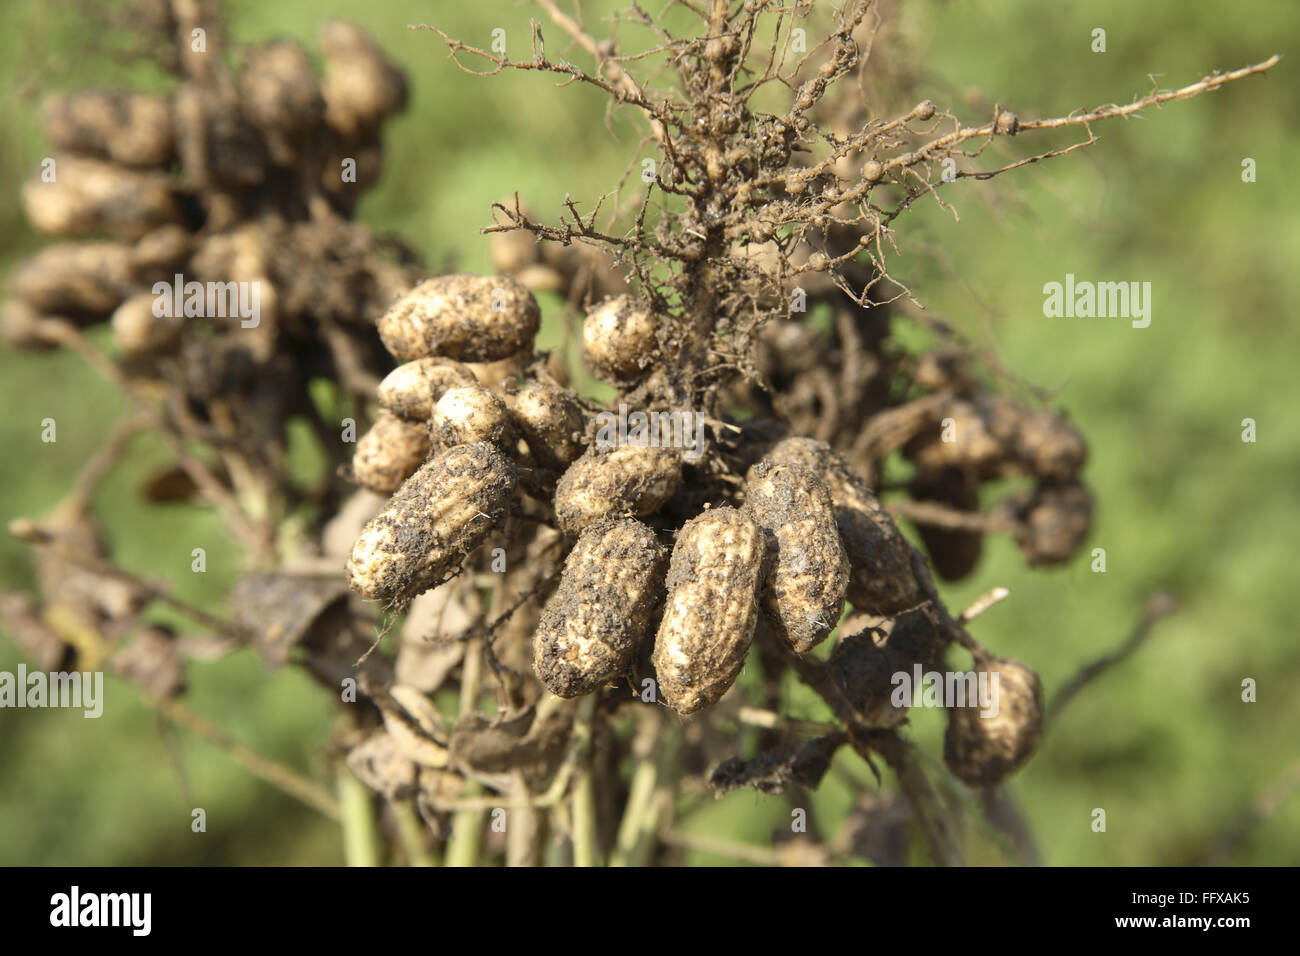 Peanut or Groundnut Arachis hypogaea grown with root underground seeds Stock Photo